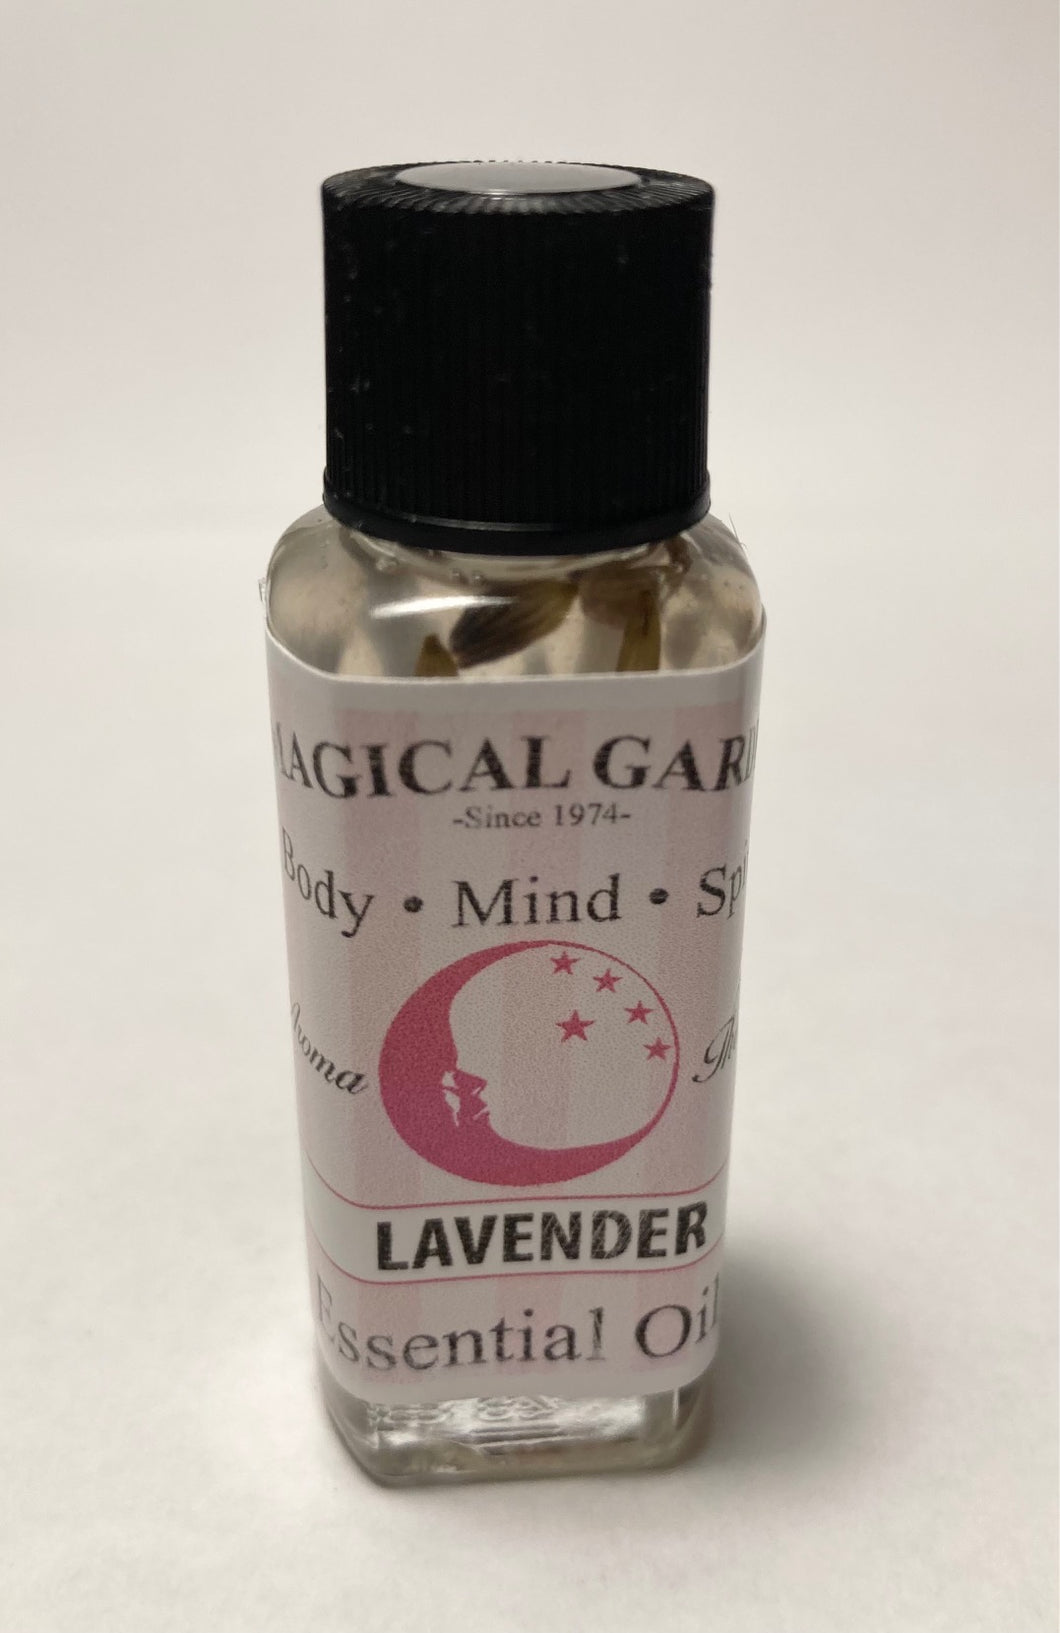 Magical Garden-Lavender Essential Oil 1/4 oz.